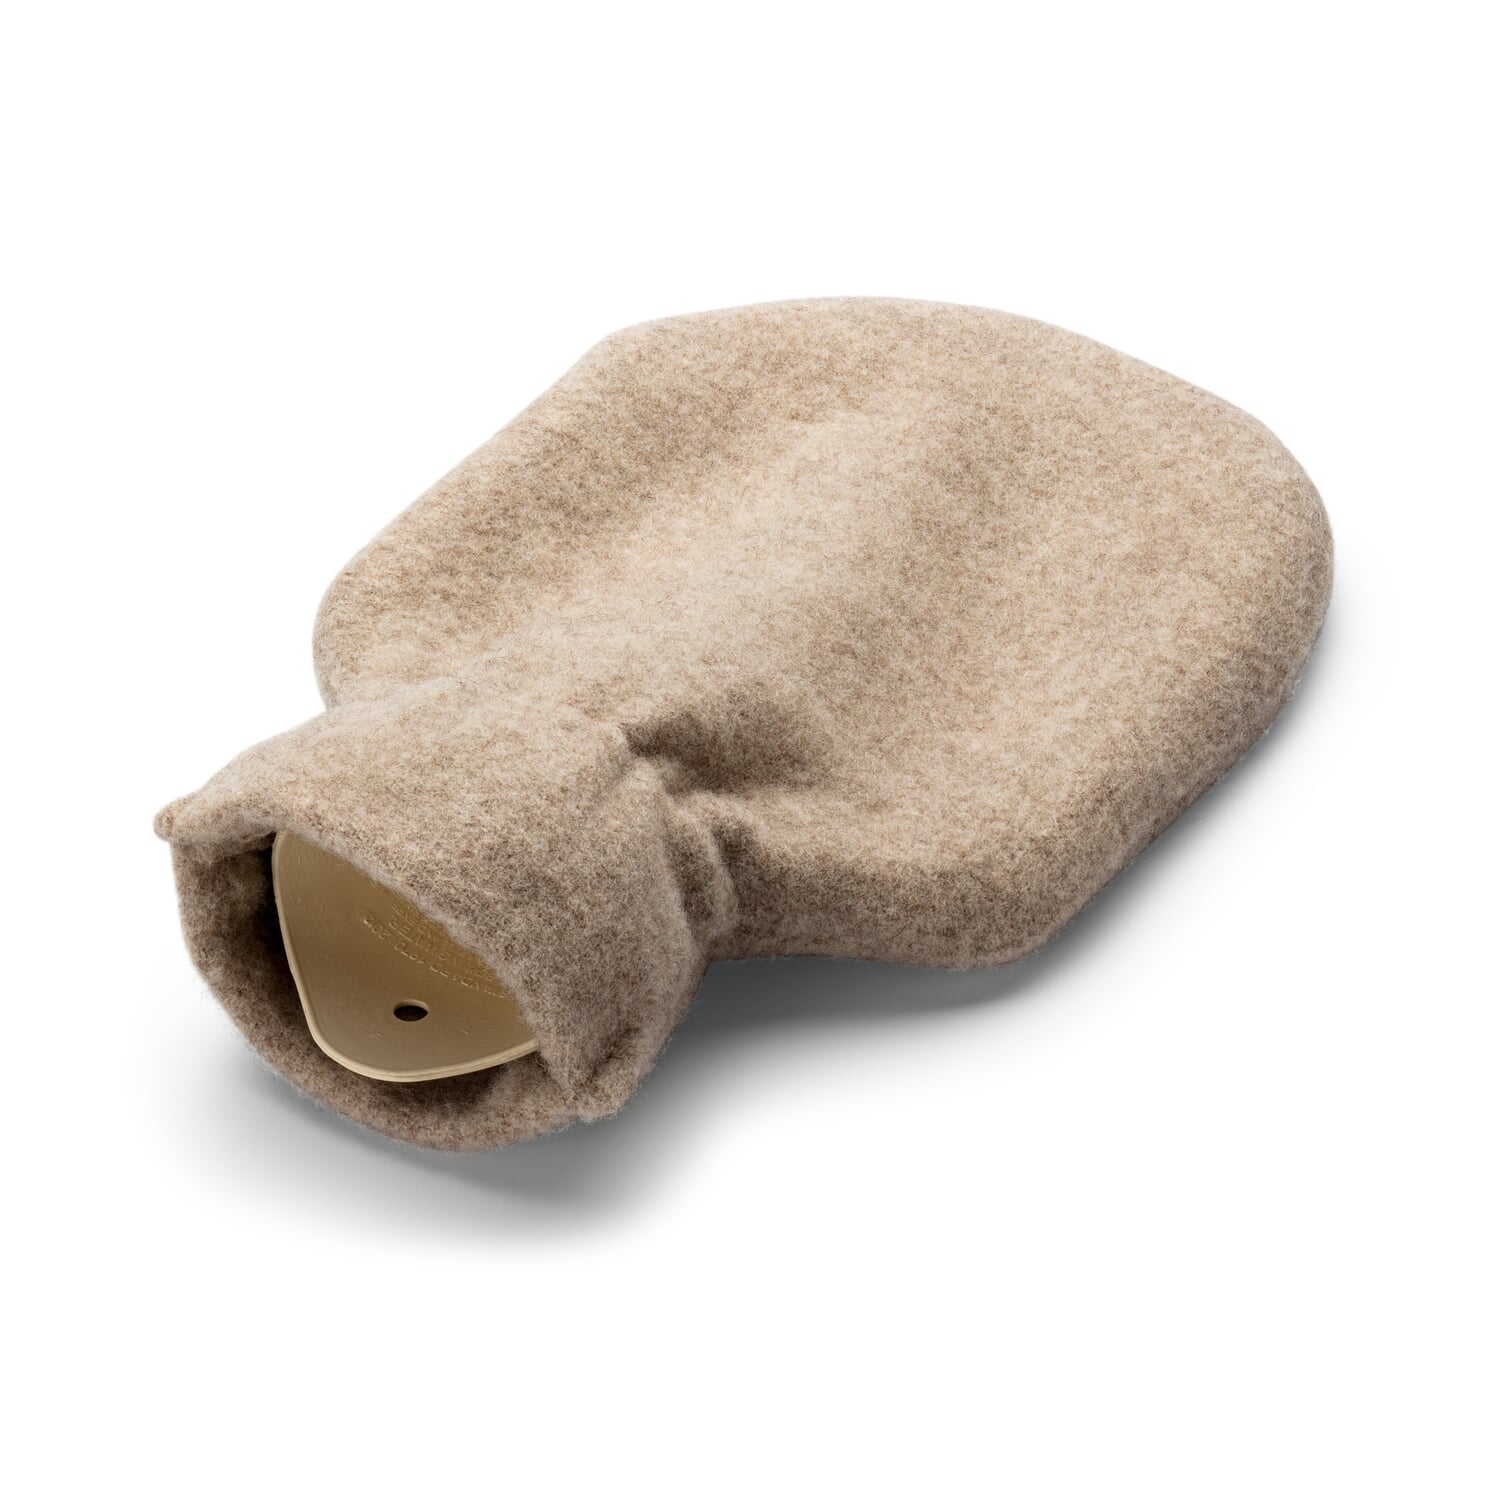 Merino Wool Toucan Hot Water Bottle Cover - includes inner